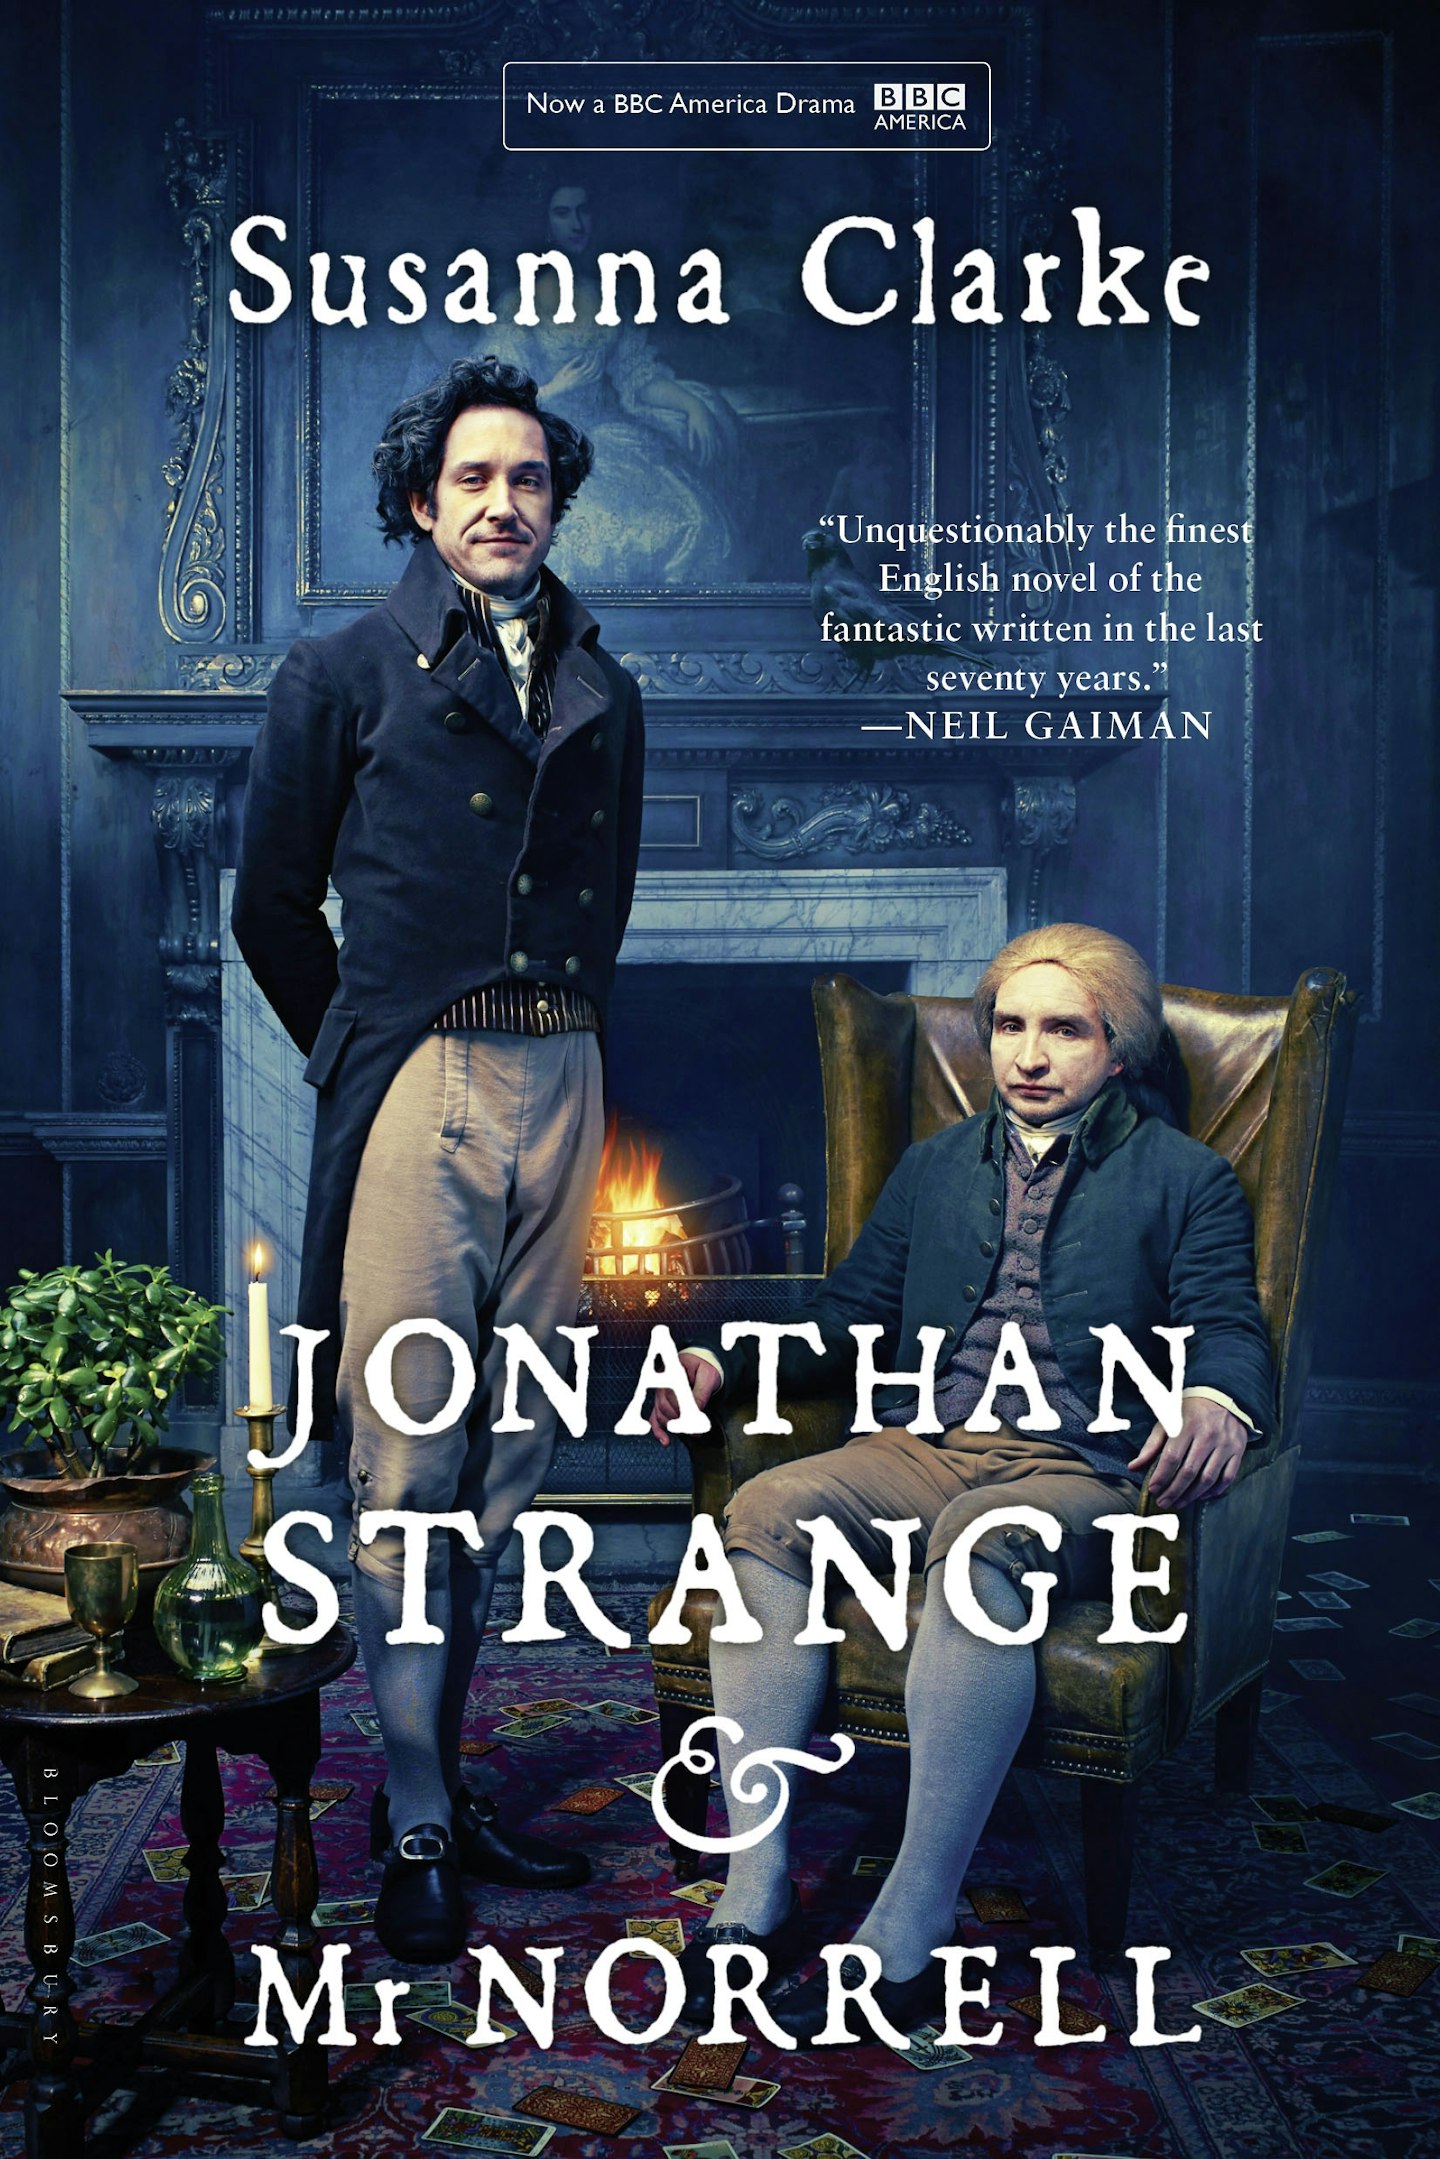 Jonathan Strange and Mr Norrell - Susanna Clarke (Bloomsbury)